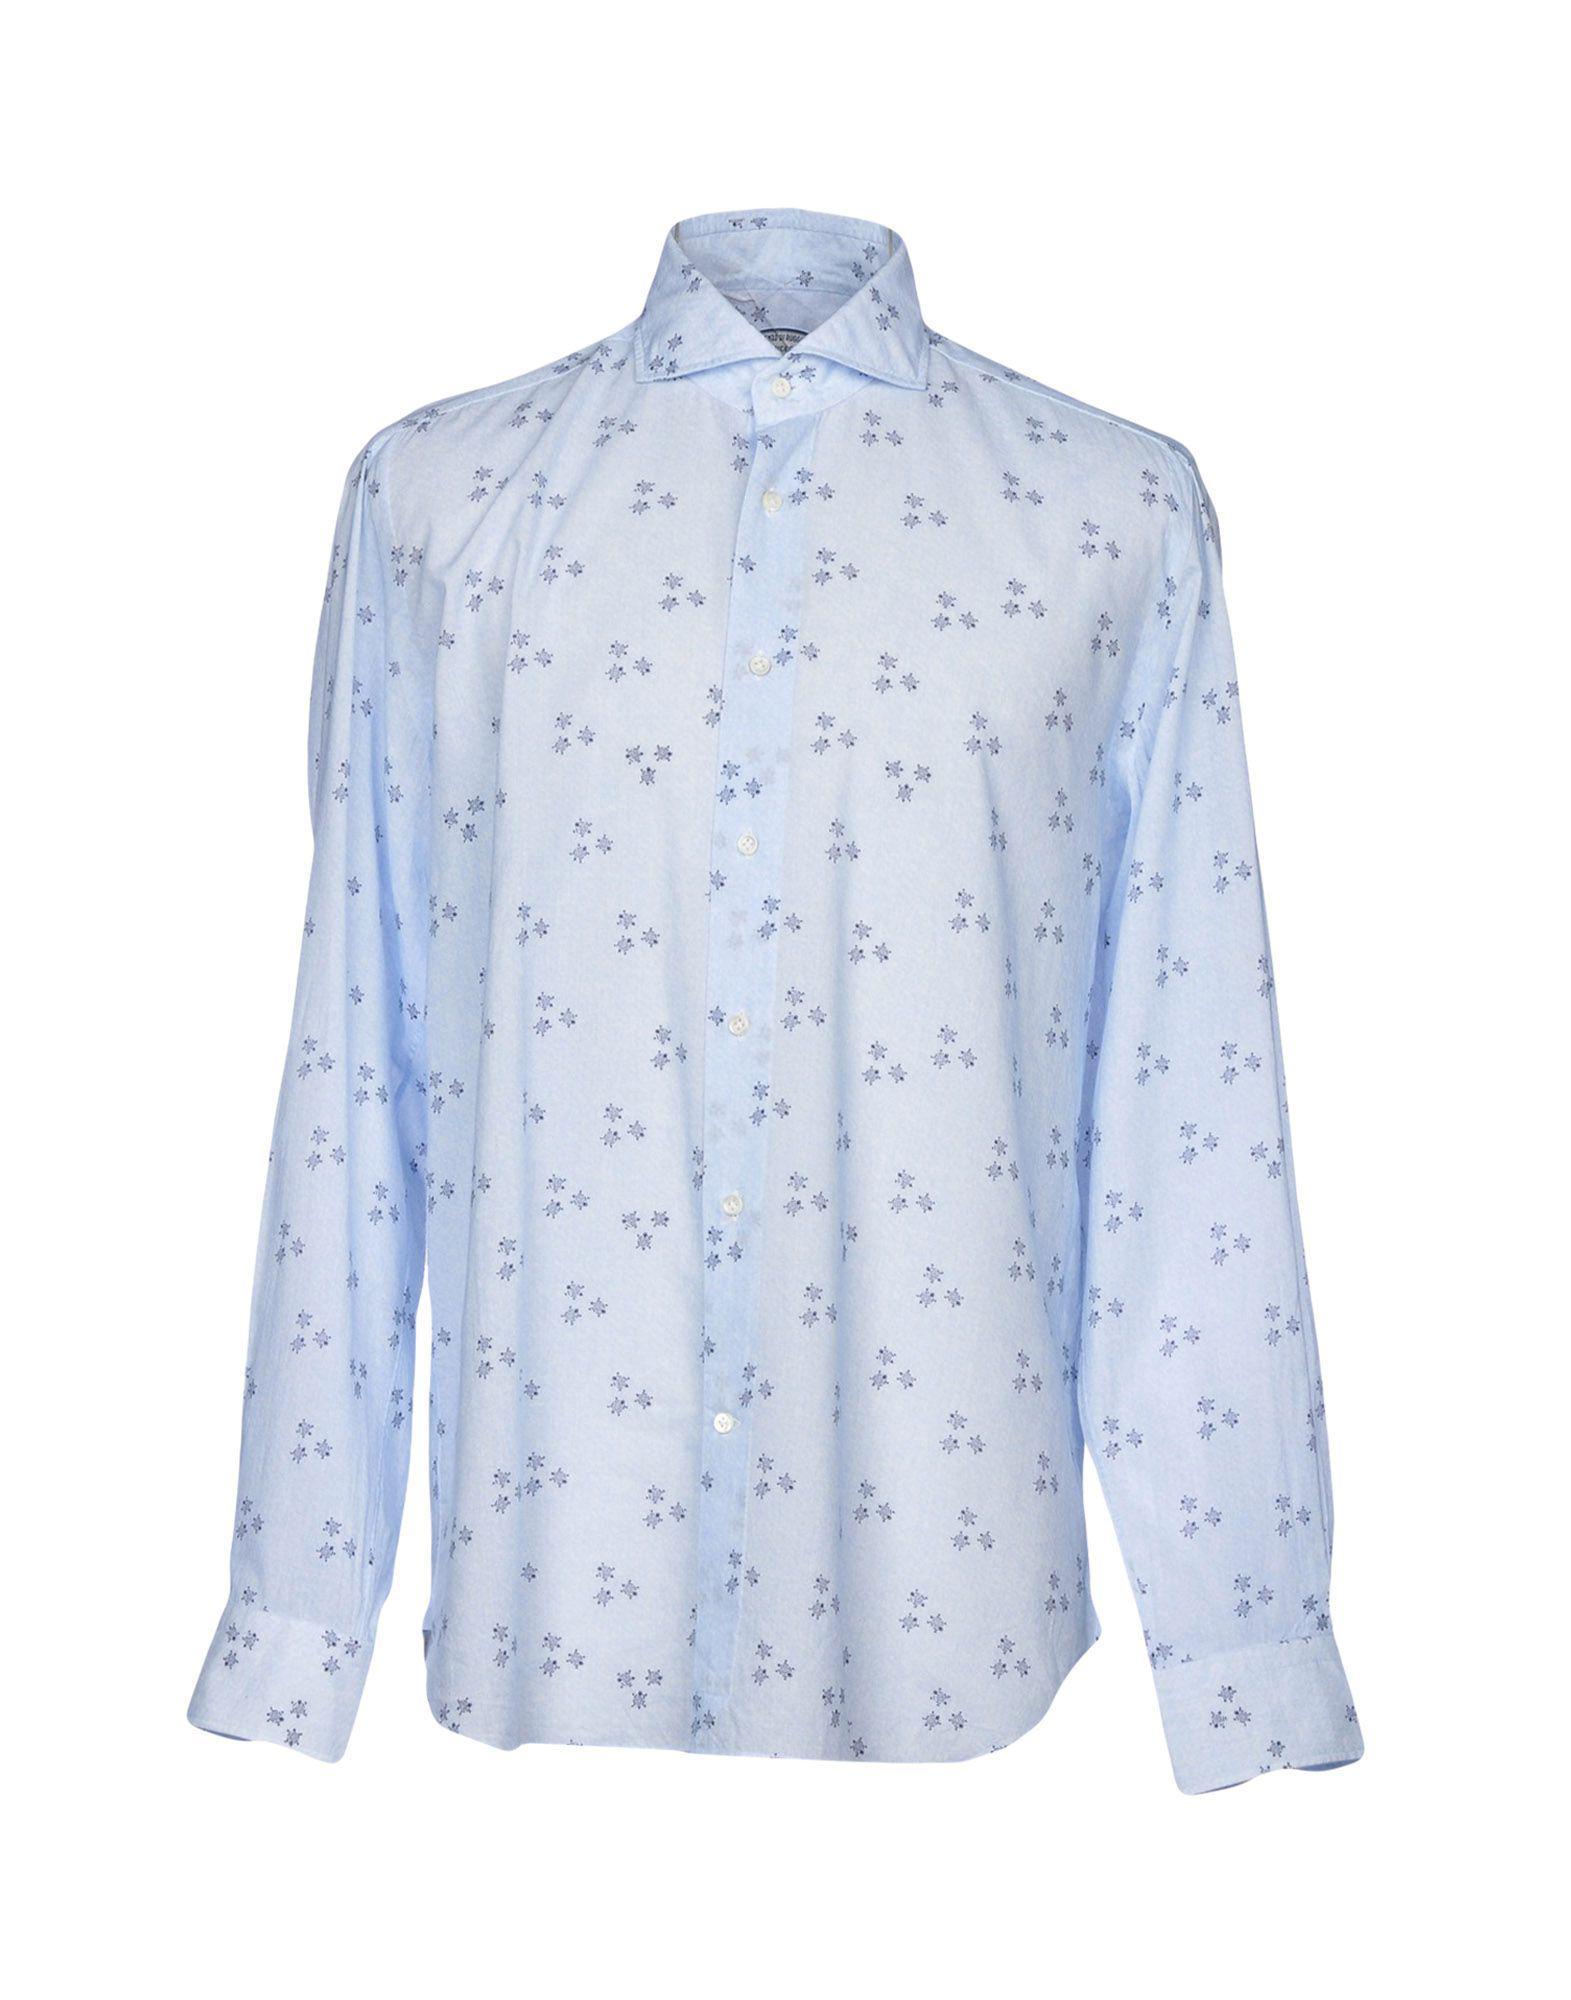 Vincenzo Di Ruggiero Cotton Shirt in Sky Blue (Blue) for Men - Lyst